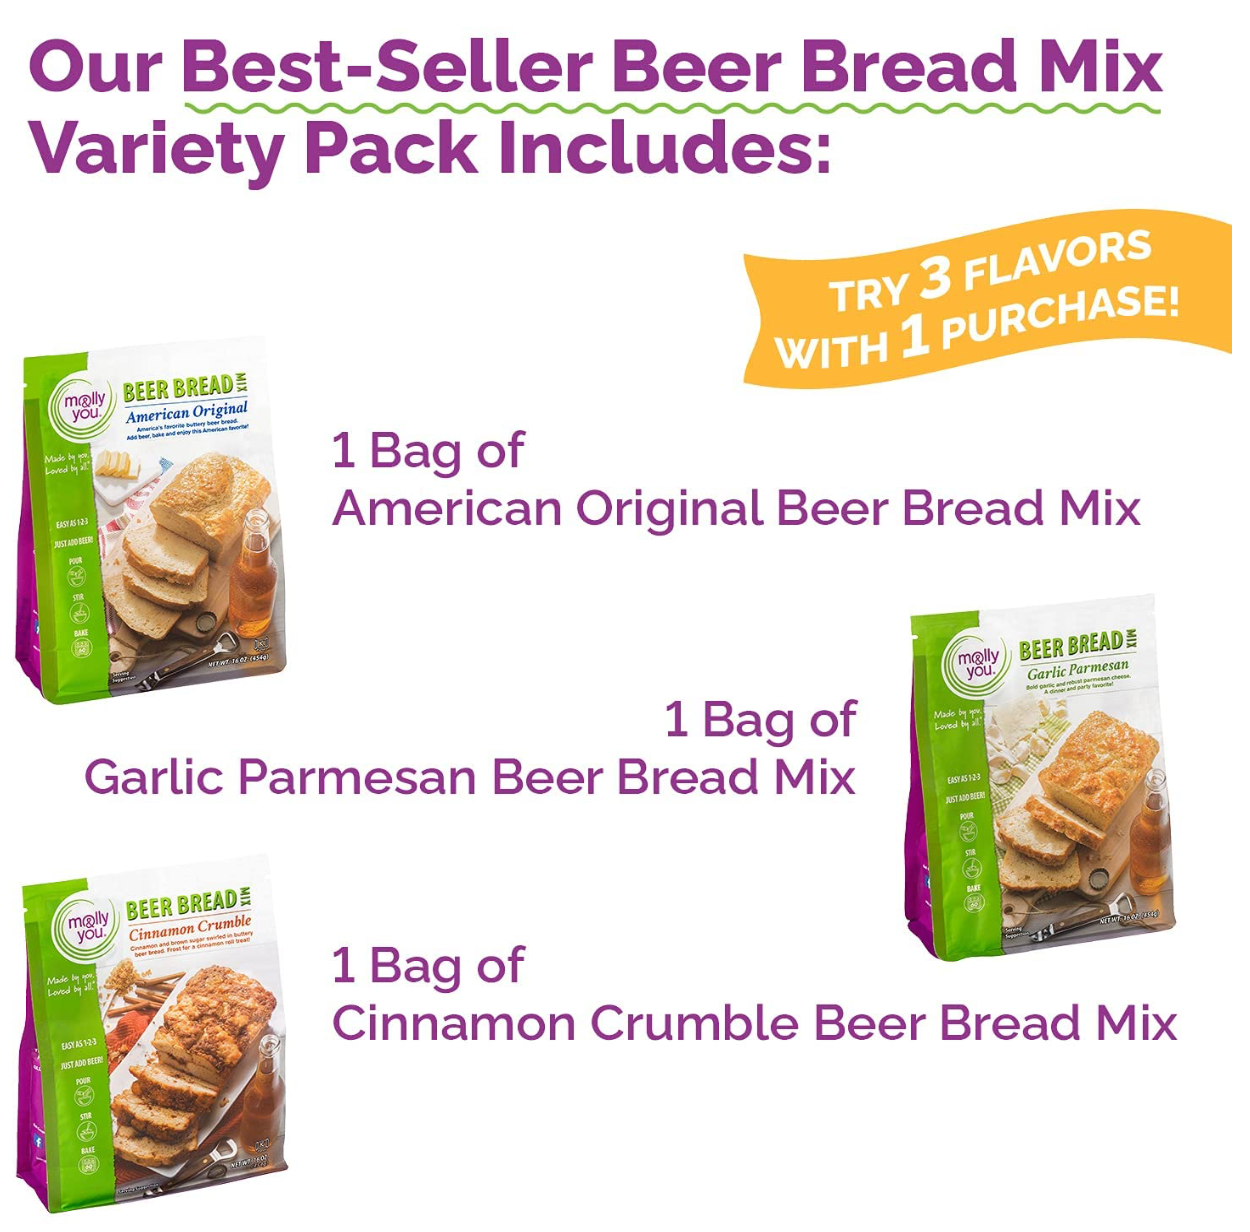 Our Best -Seller Beer Bread Mix Variety Pack Includes: American Original Beer Bread, Garlic Parmesan Beer Bread, Cinnamon Crumble Beer Bread Mix